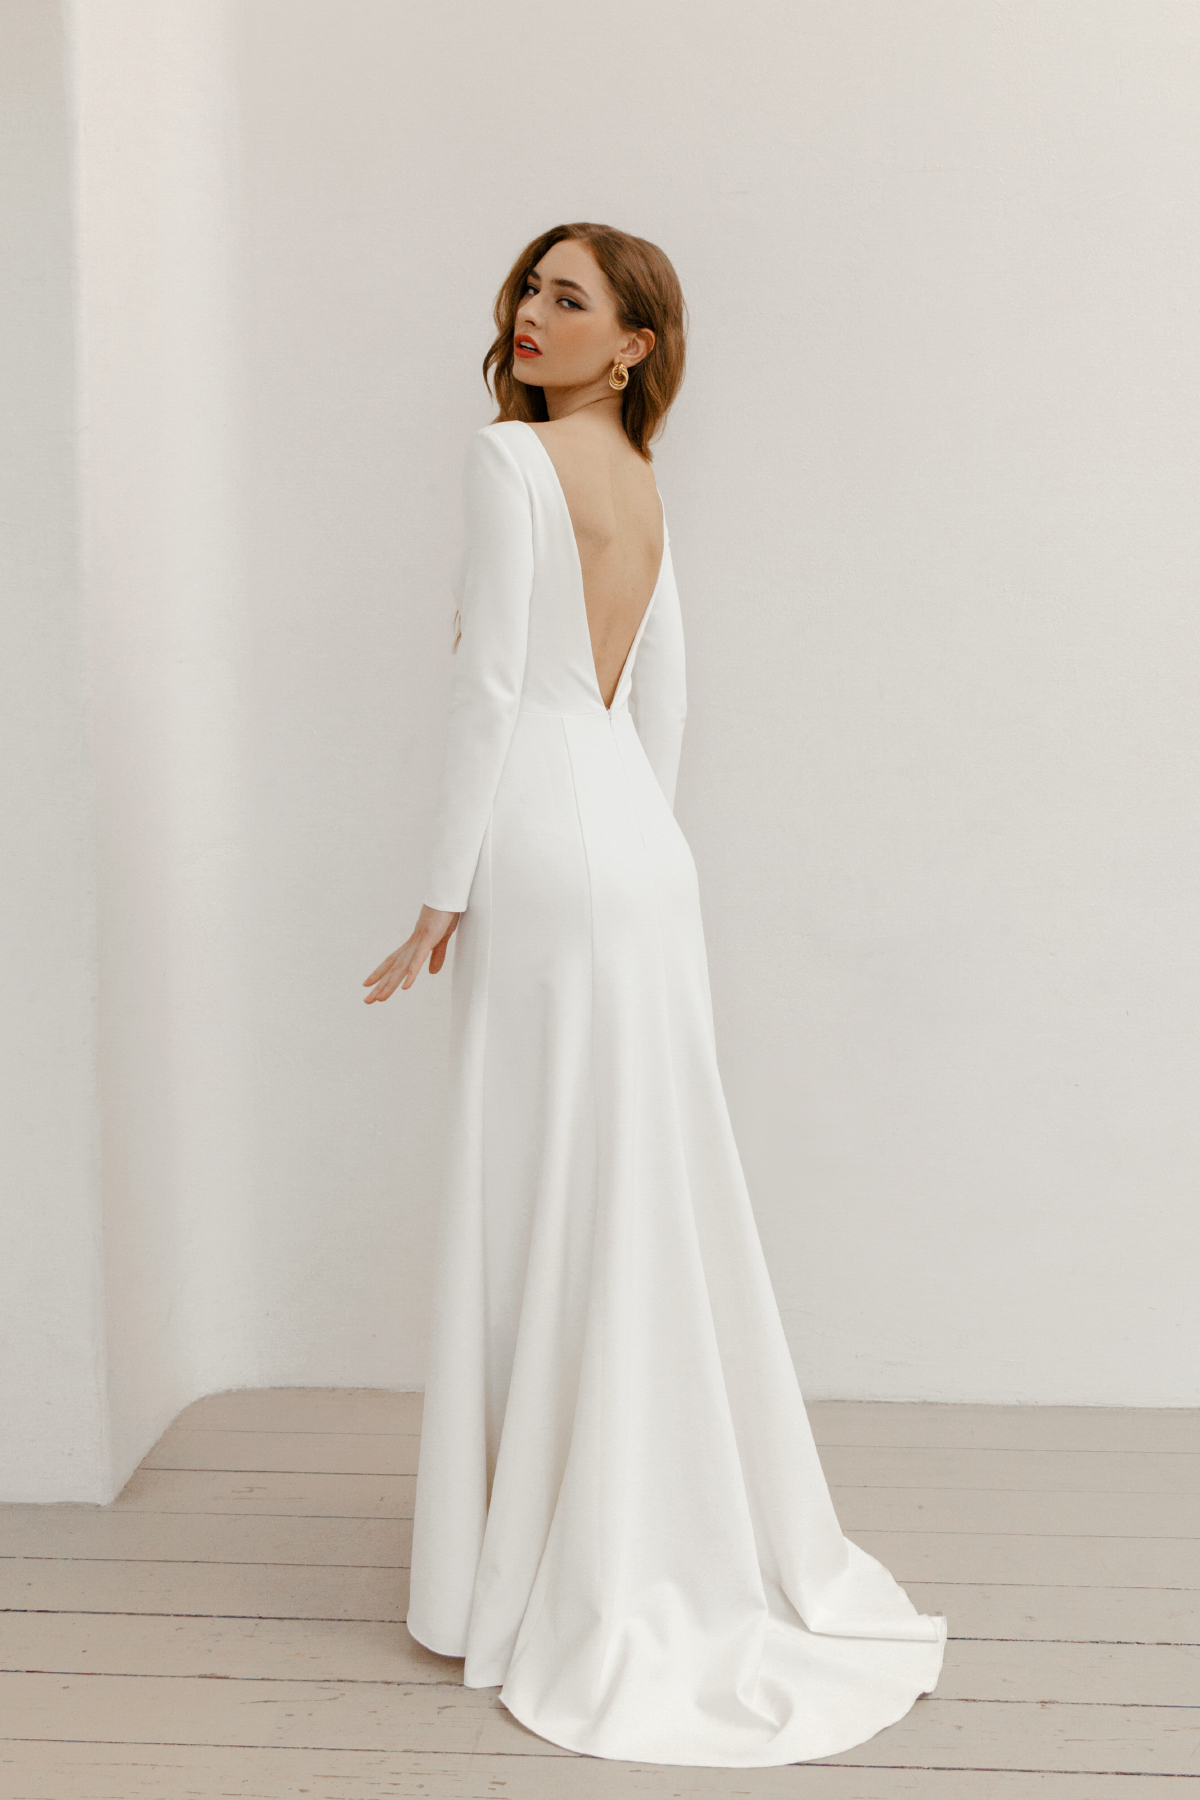 Low back elegant wedding dress